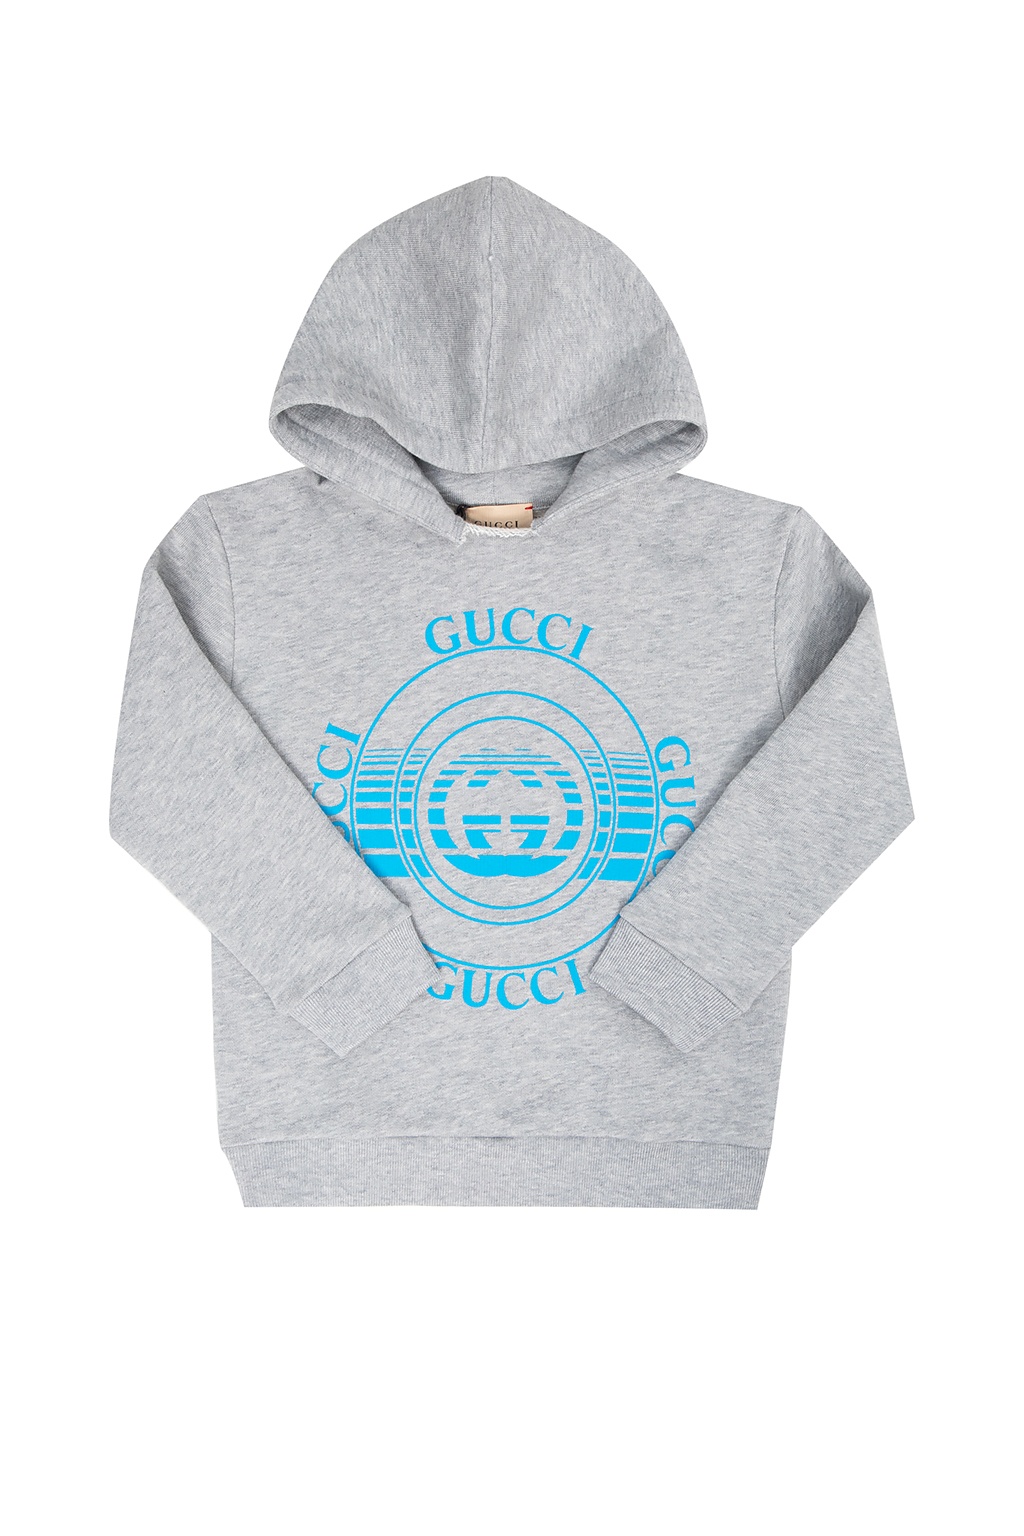 gucci Where Kids Branded hoodie